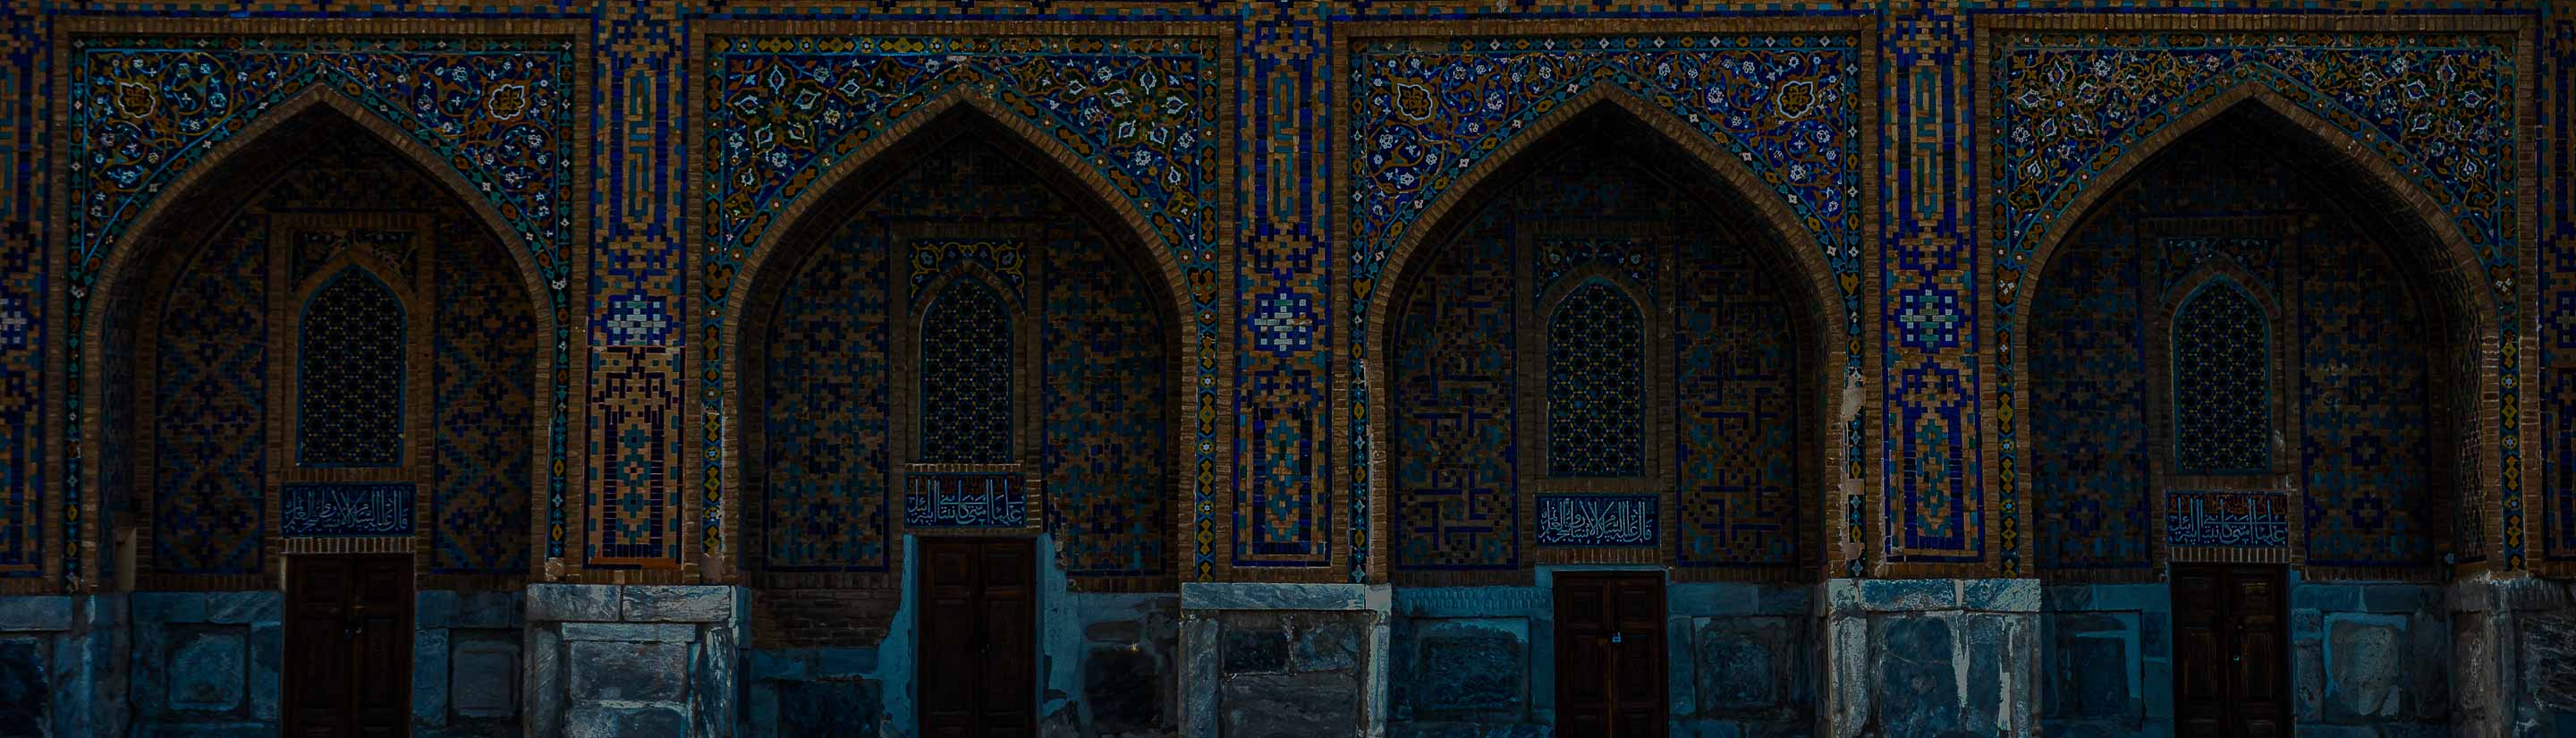 Bögen am Registan in Samarkand in Usbekistan